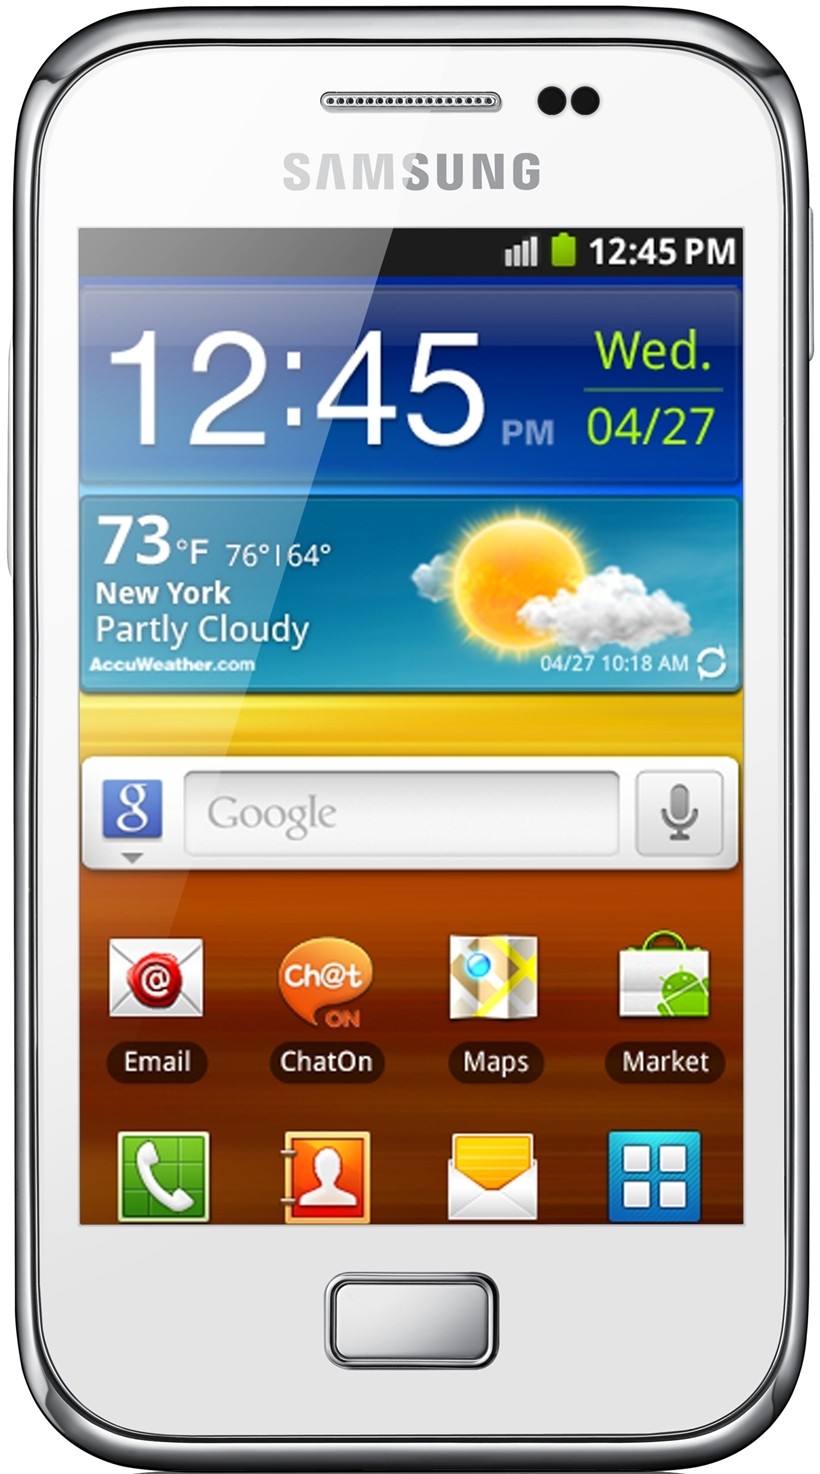 Samsung Galaxy Ace Plus S7500 chic white